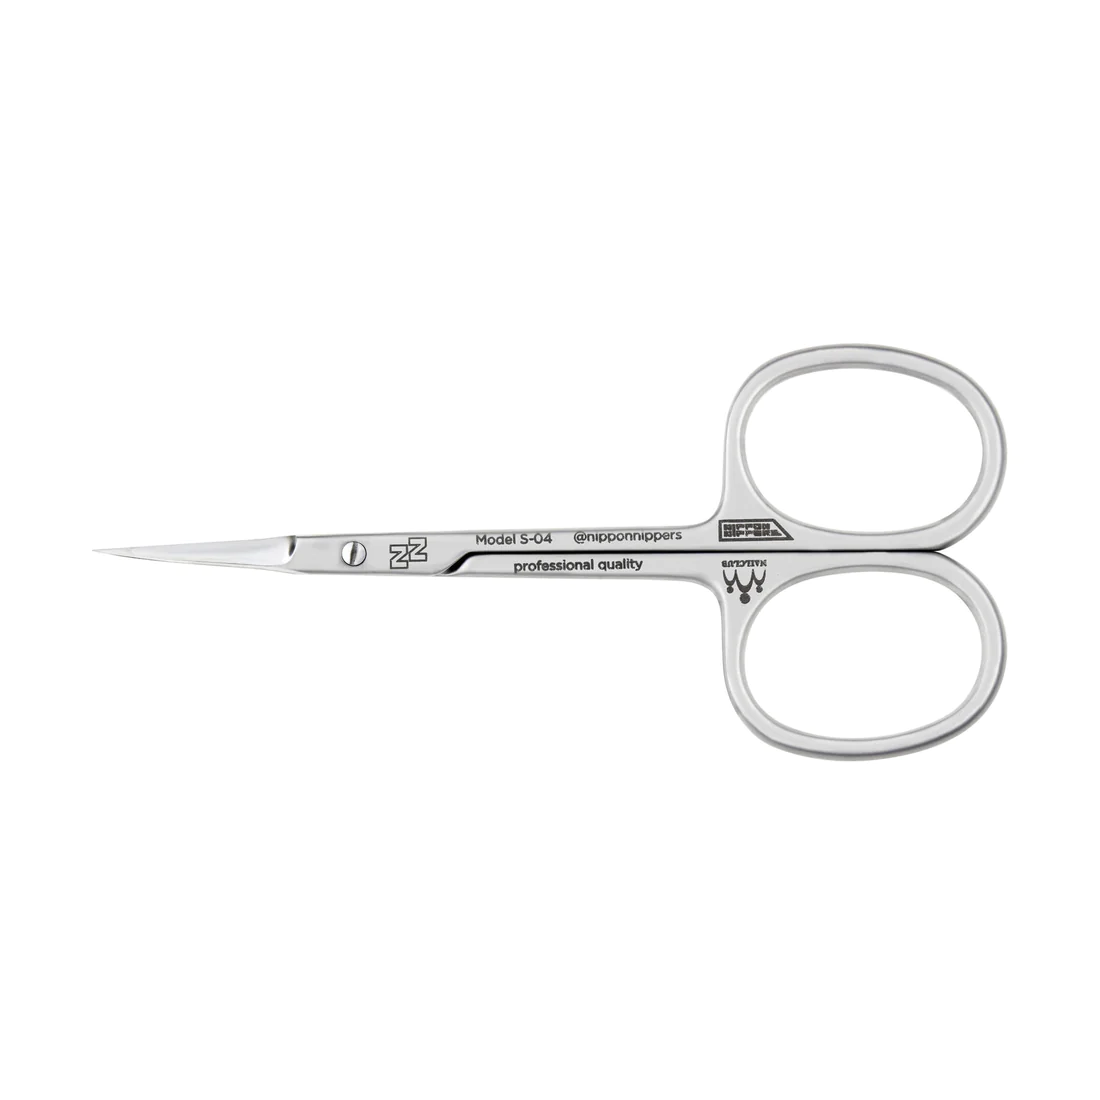 NIPPON NIPPERS Cuticle scissors S-04